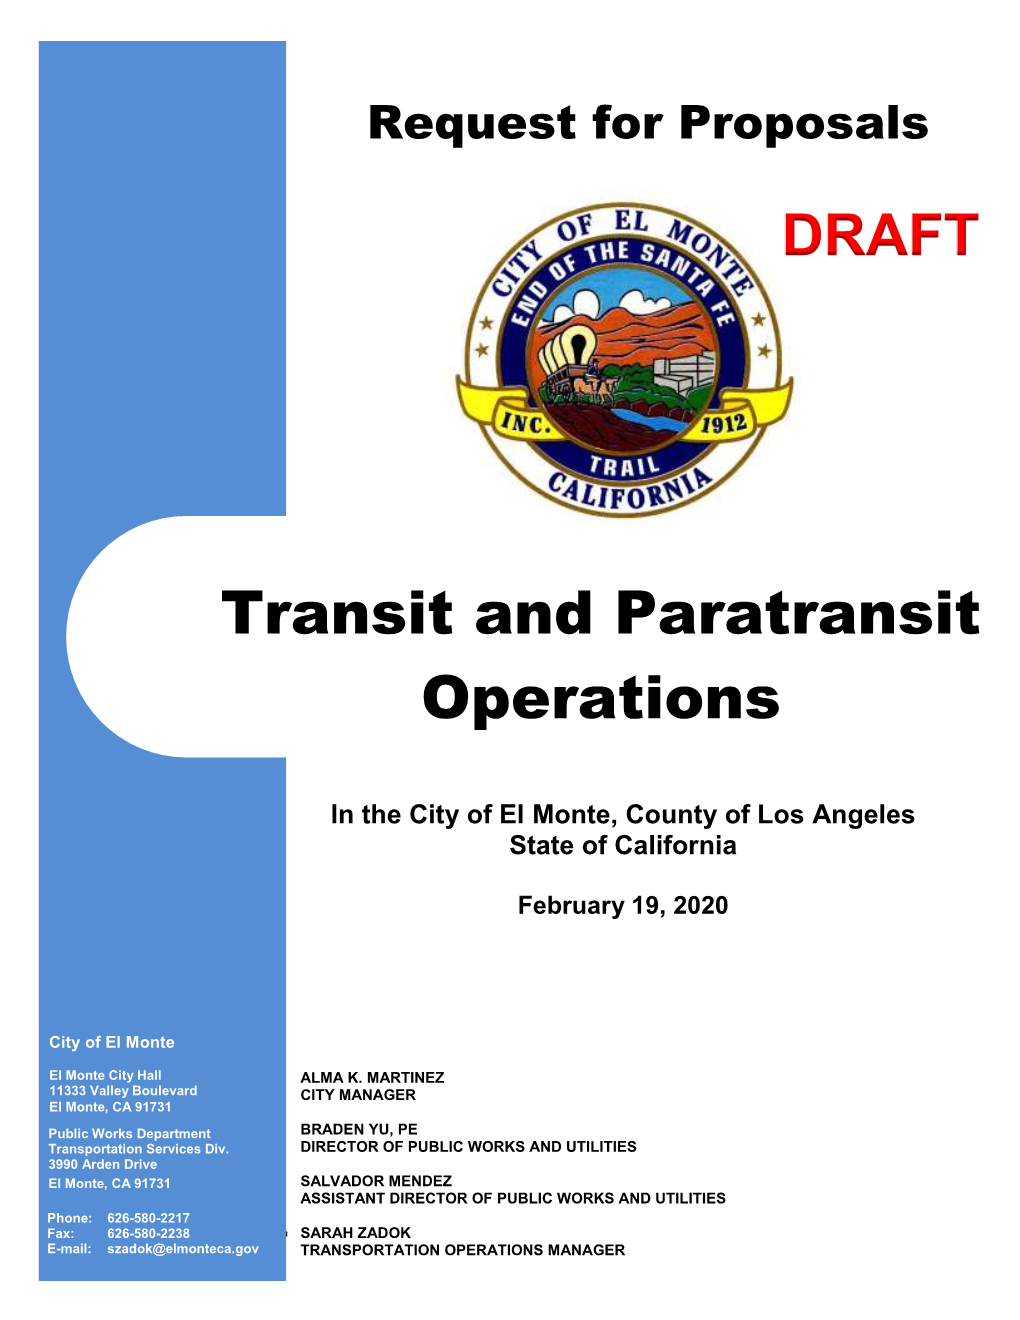 Transit and Paratransit Operations